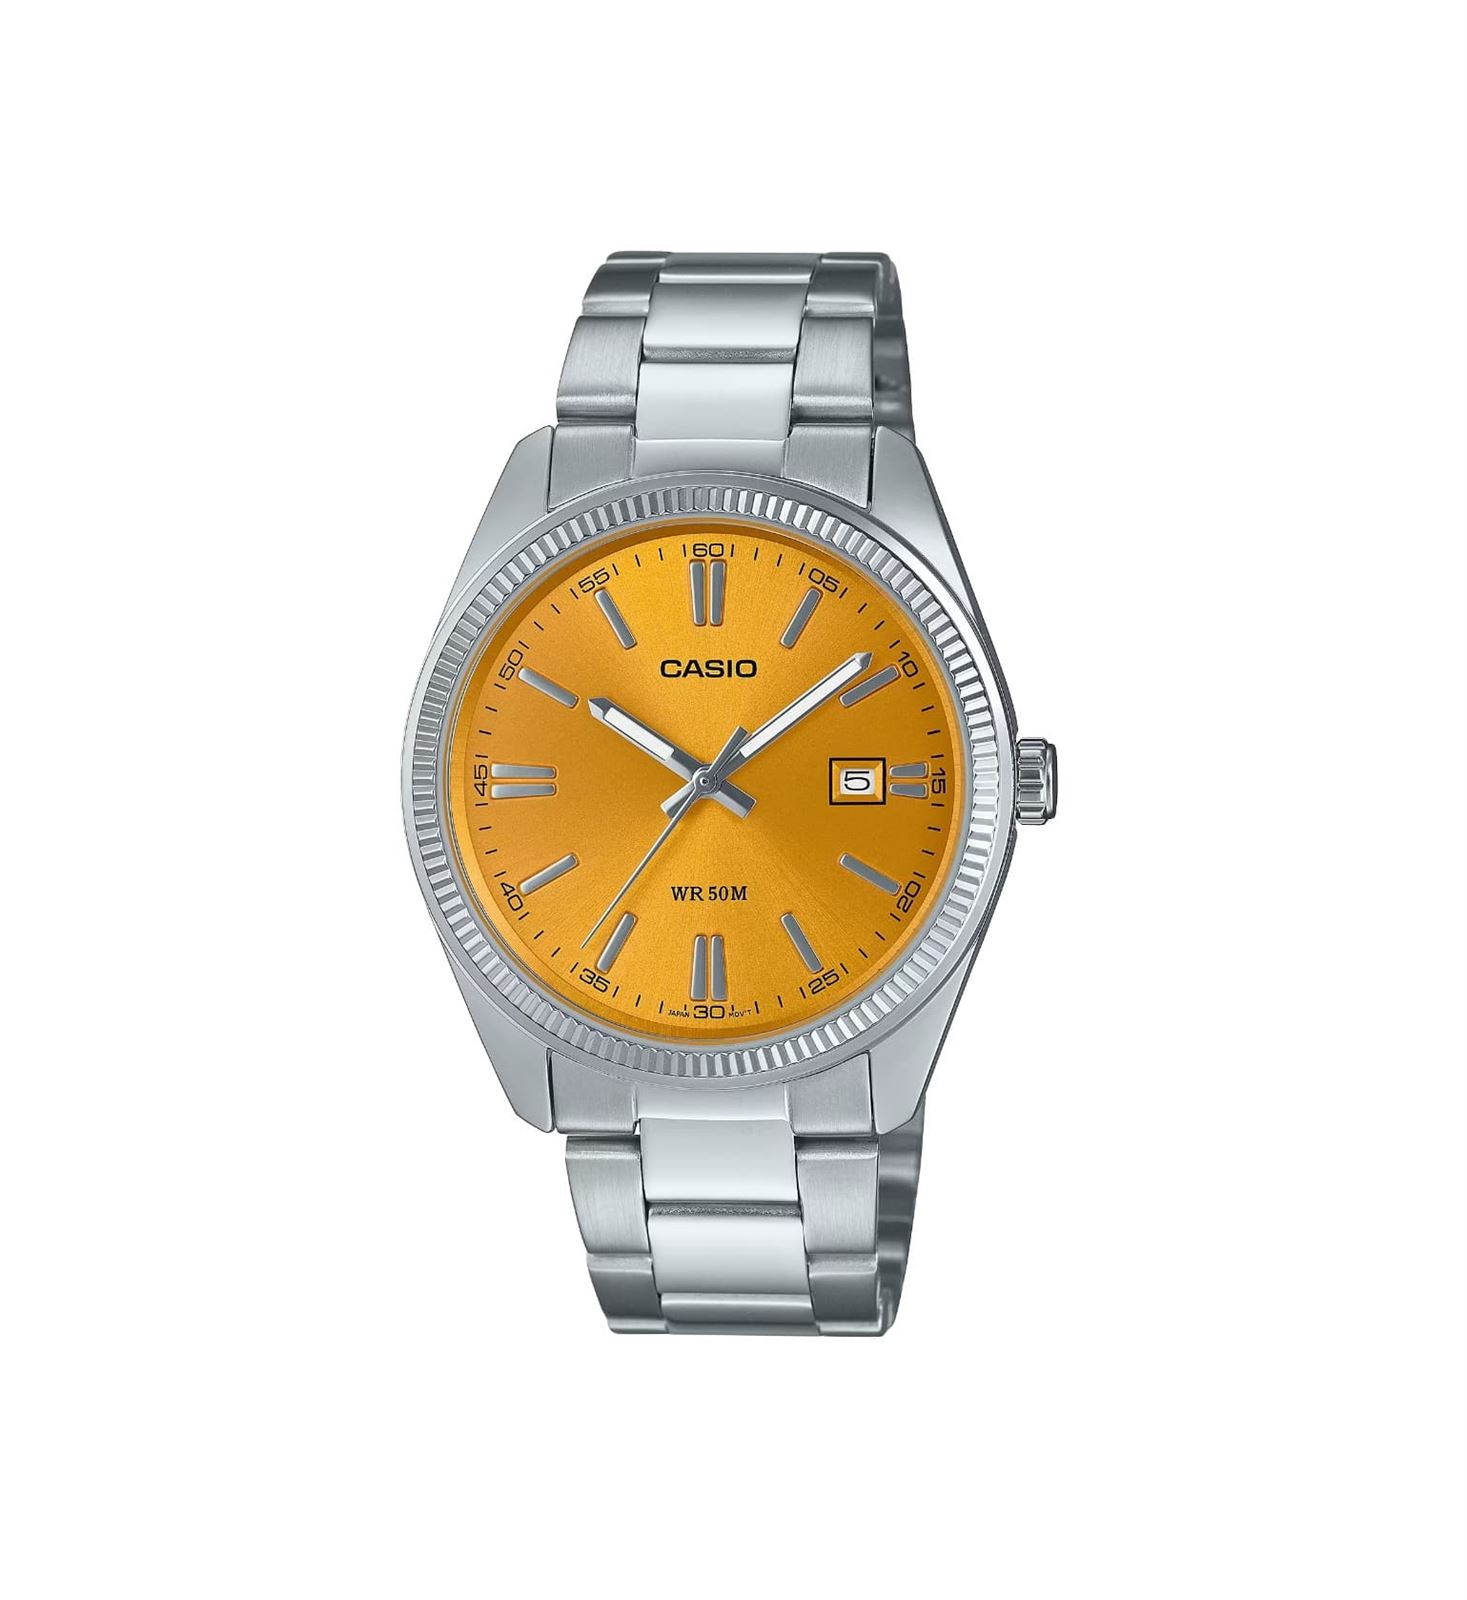 Reloj Casio MTP-1302PD-4AV amarillo - Imagen 1